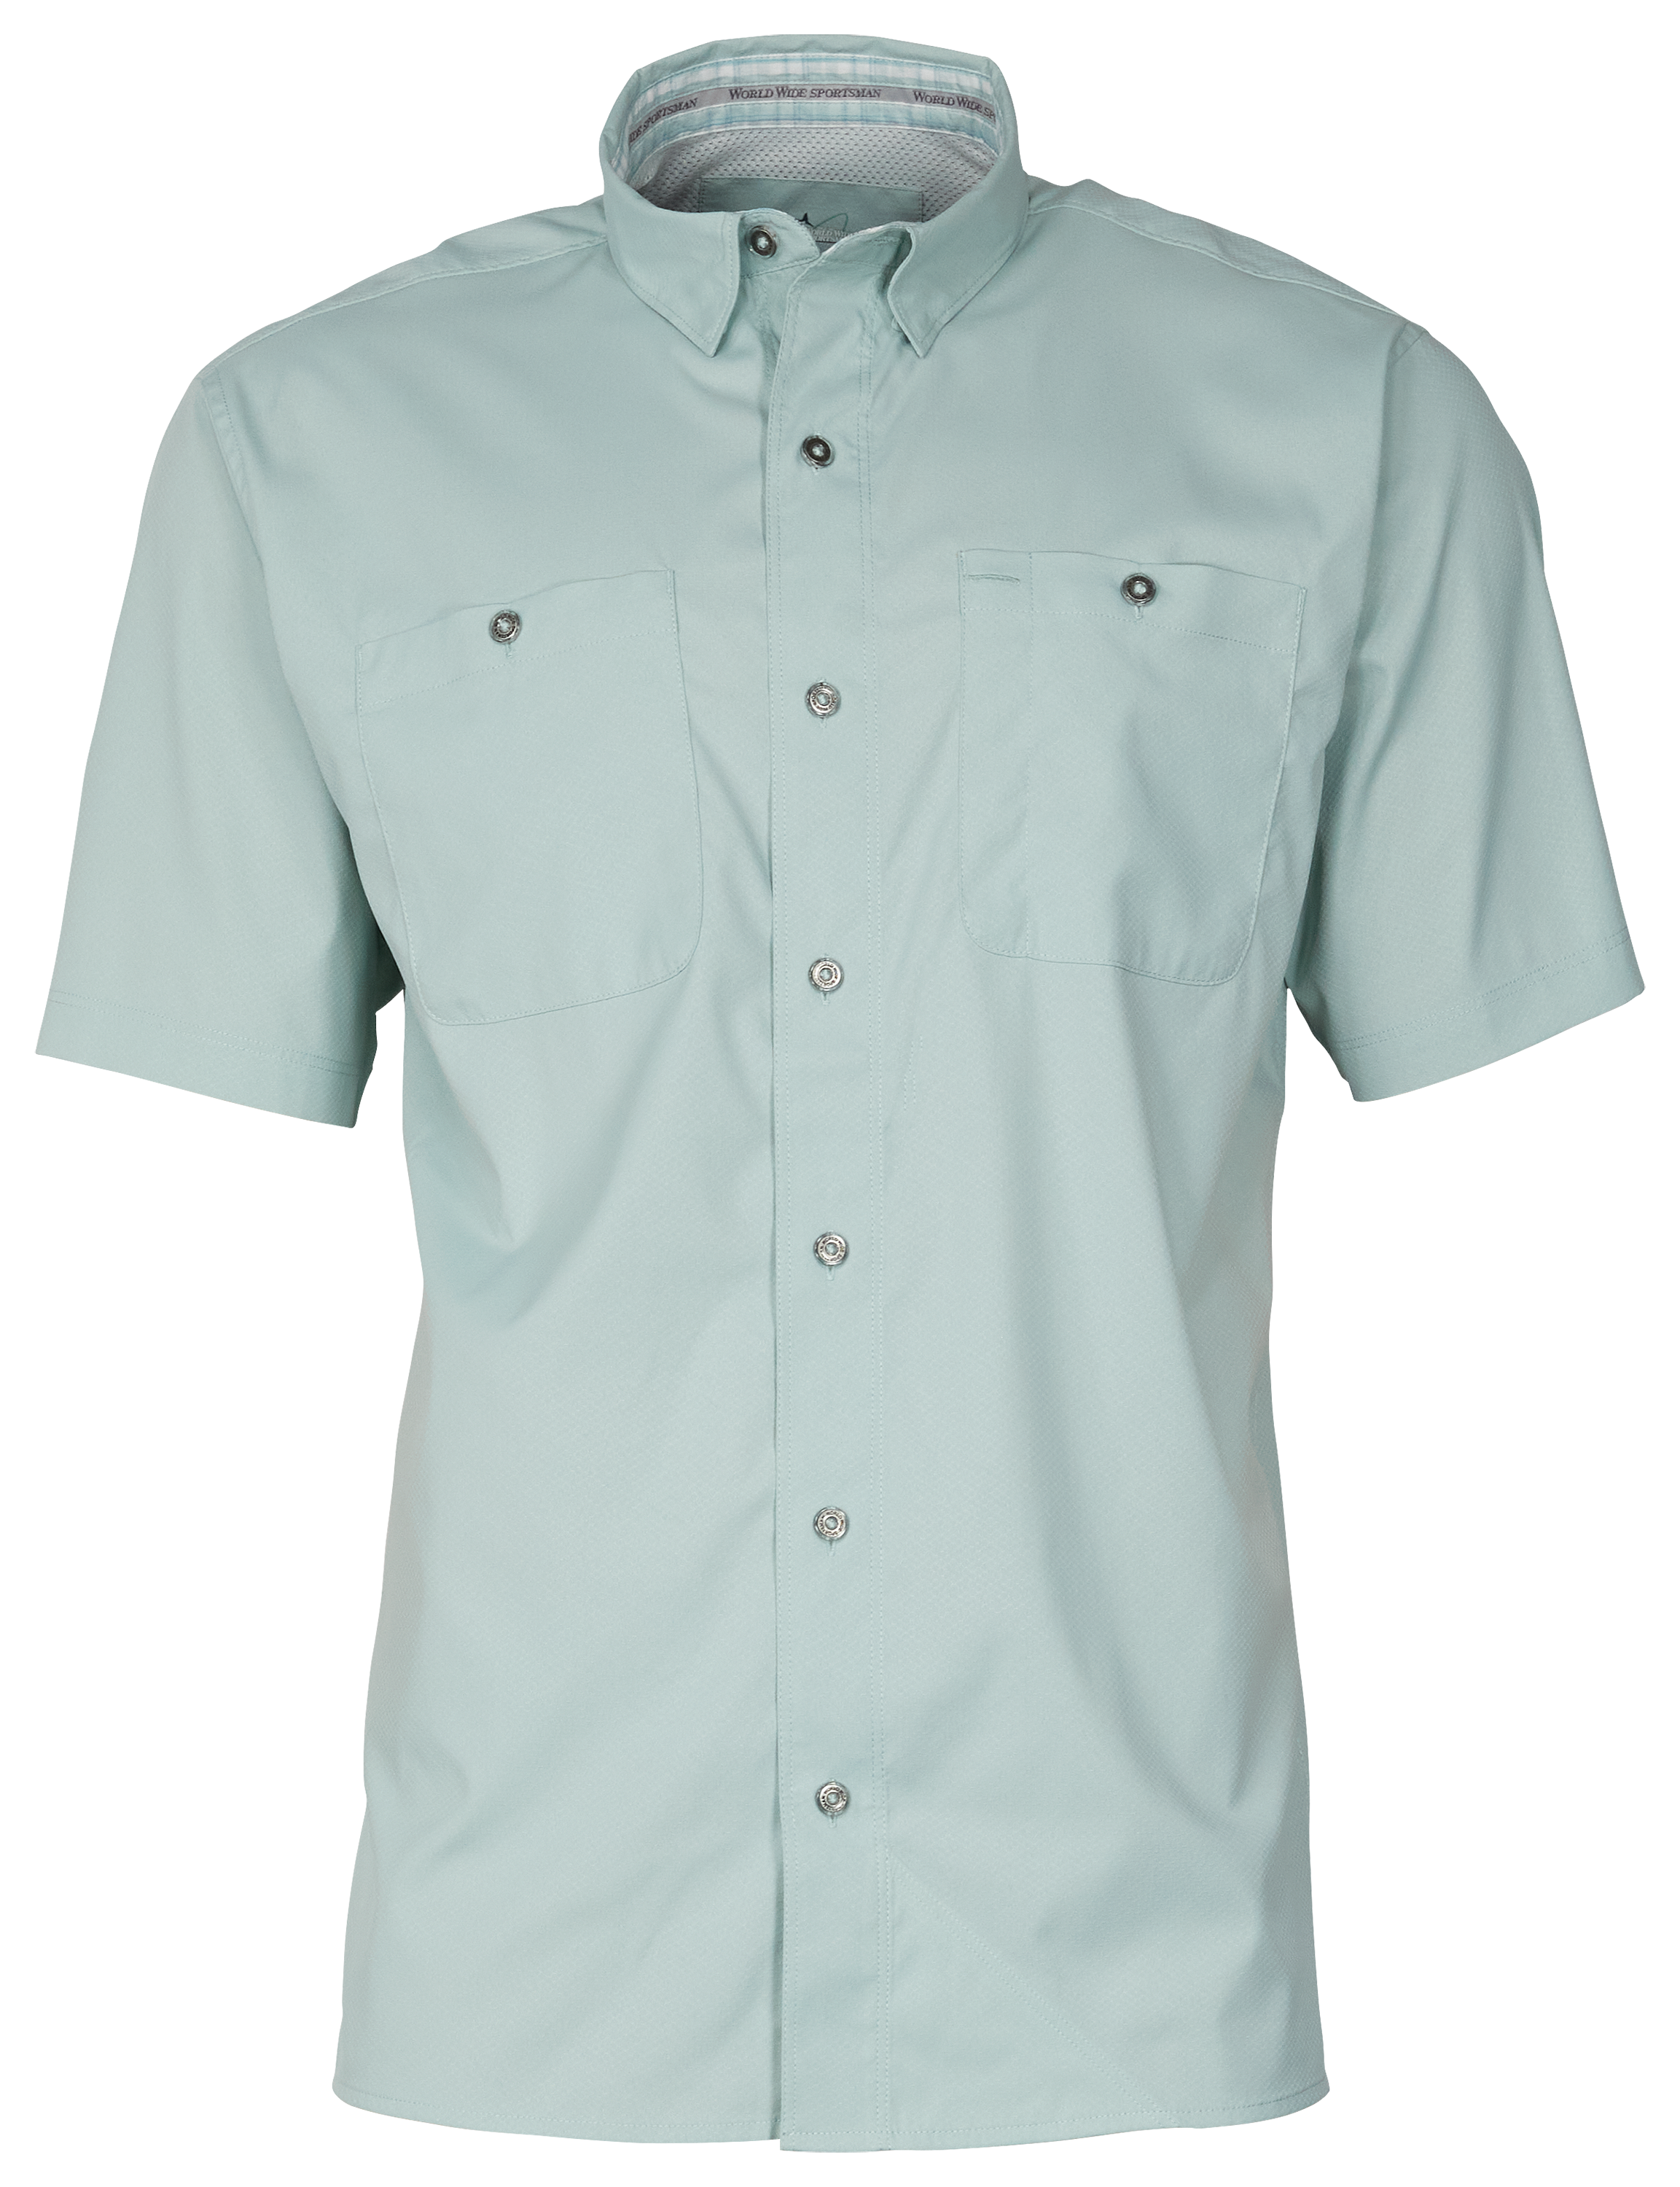 World Wide Sportsman Ultimate Angler Solid Short-Sleeve Shirt for Men - Harbor Gray - L